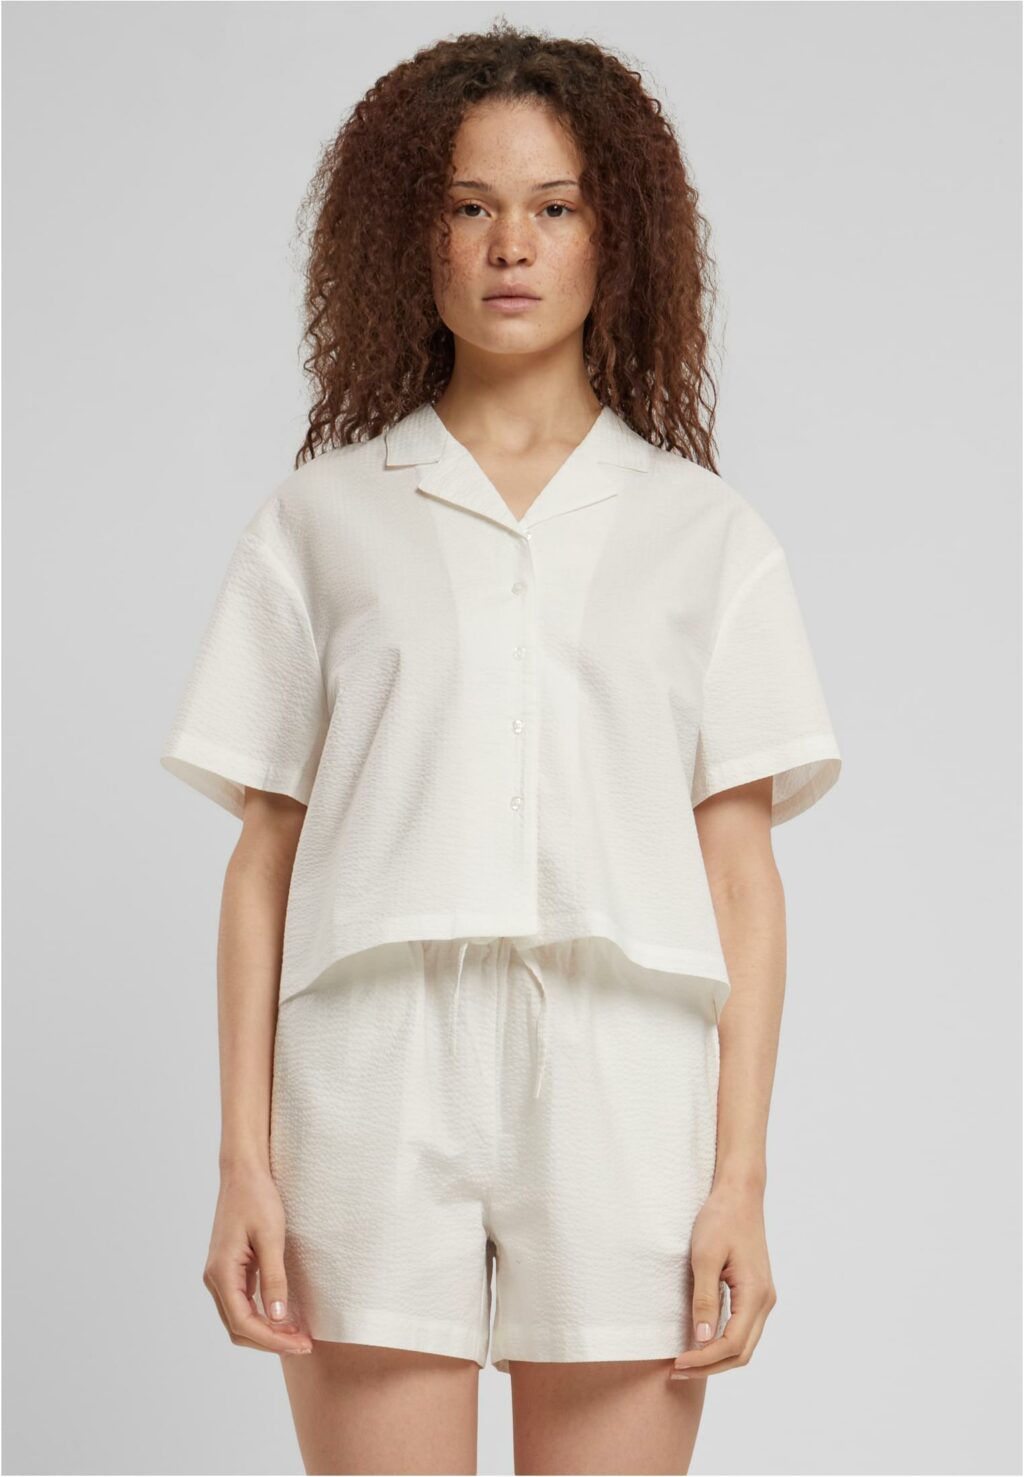 Urban Classics Ladies Seersucker Shirt white TB6181